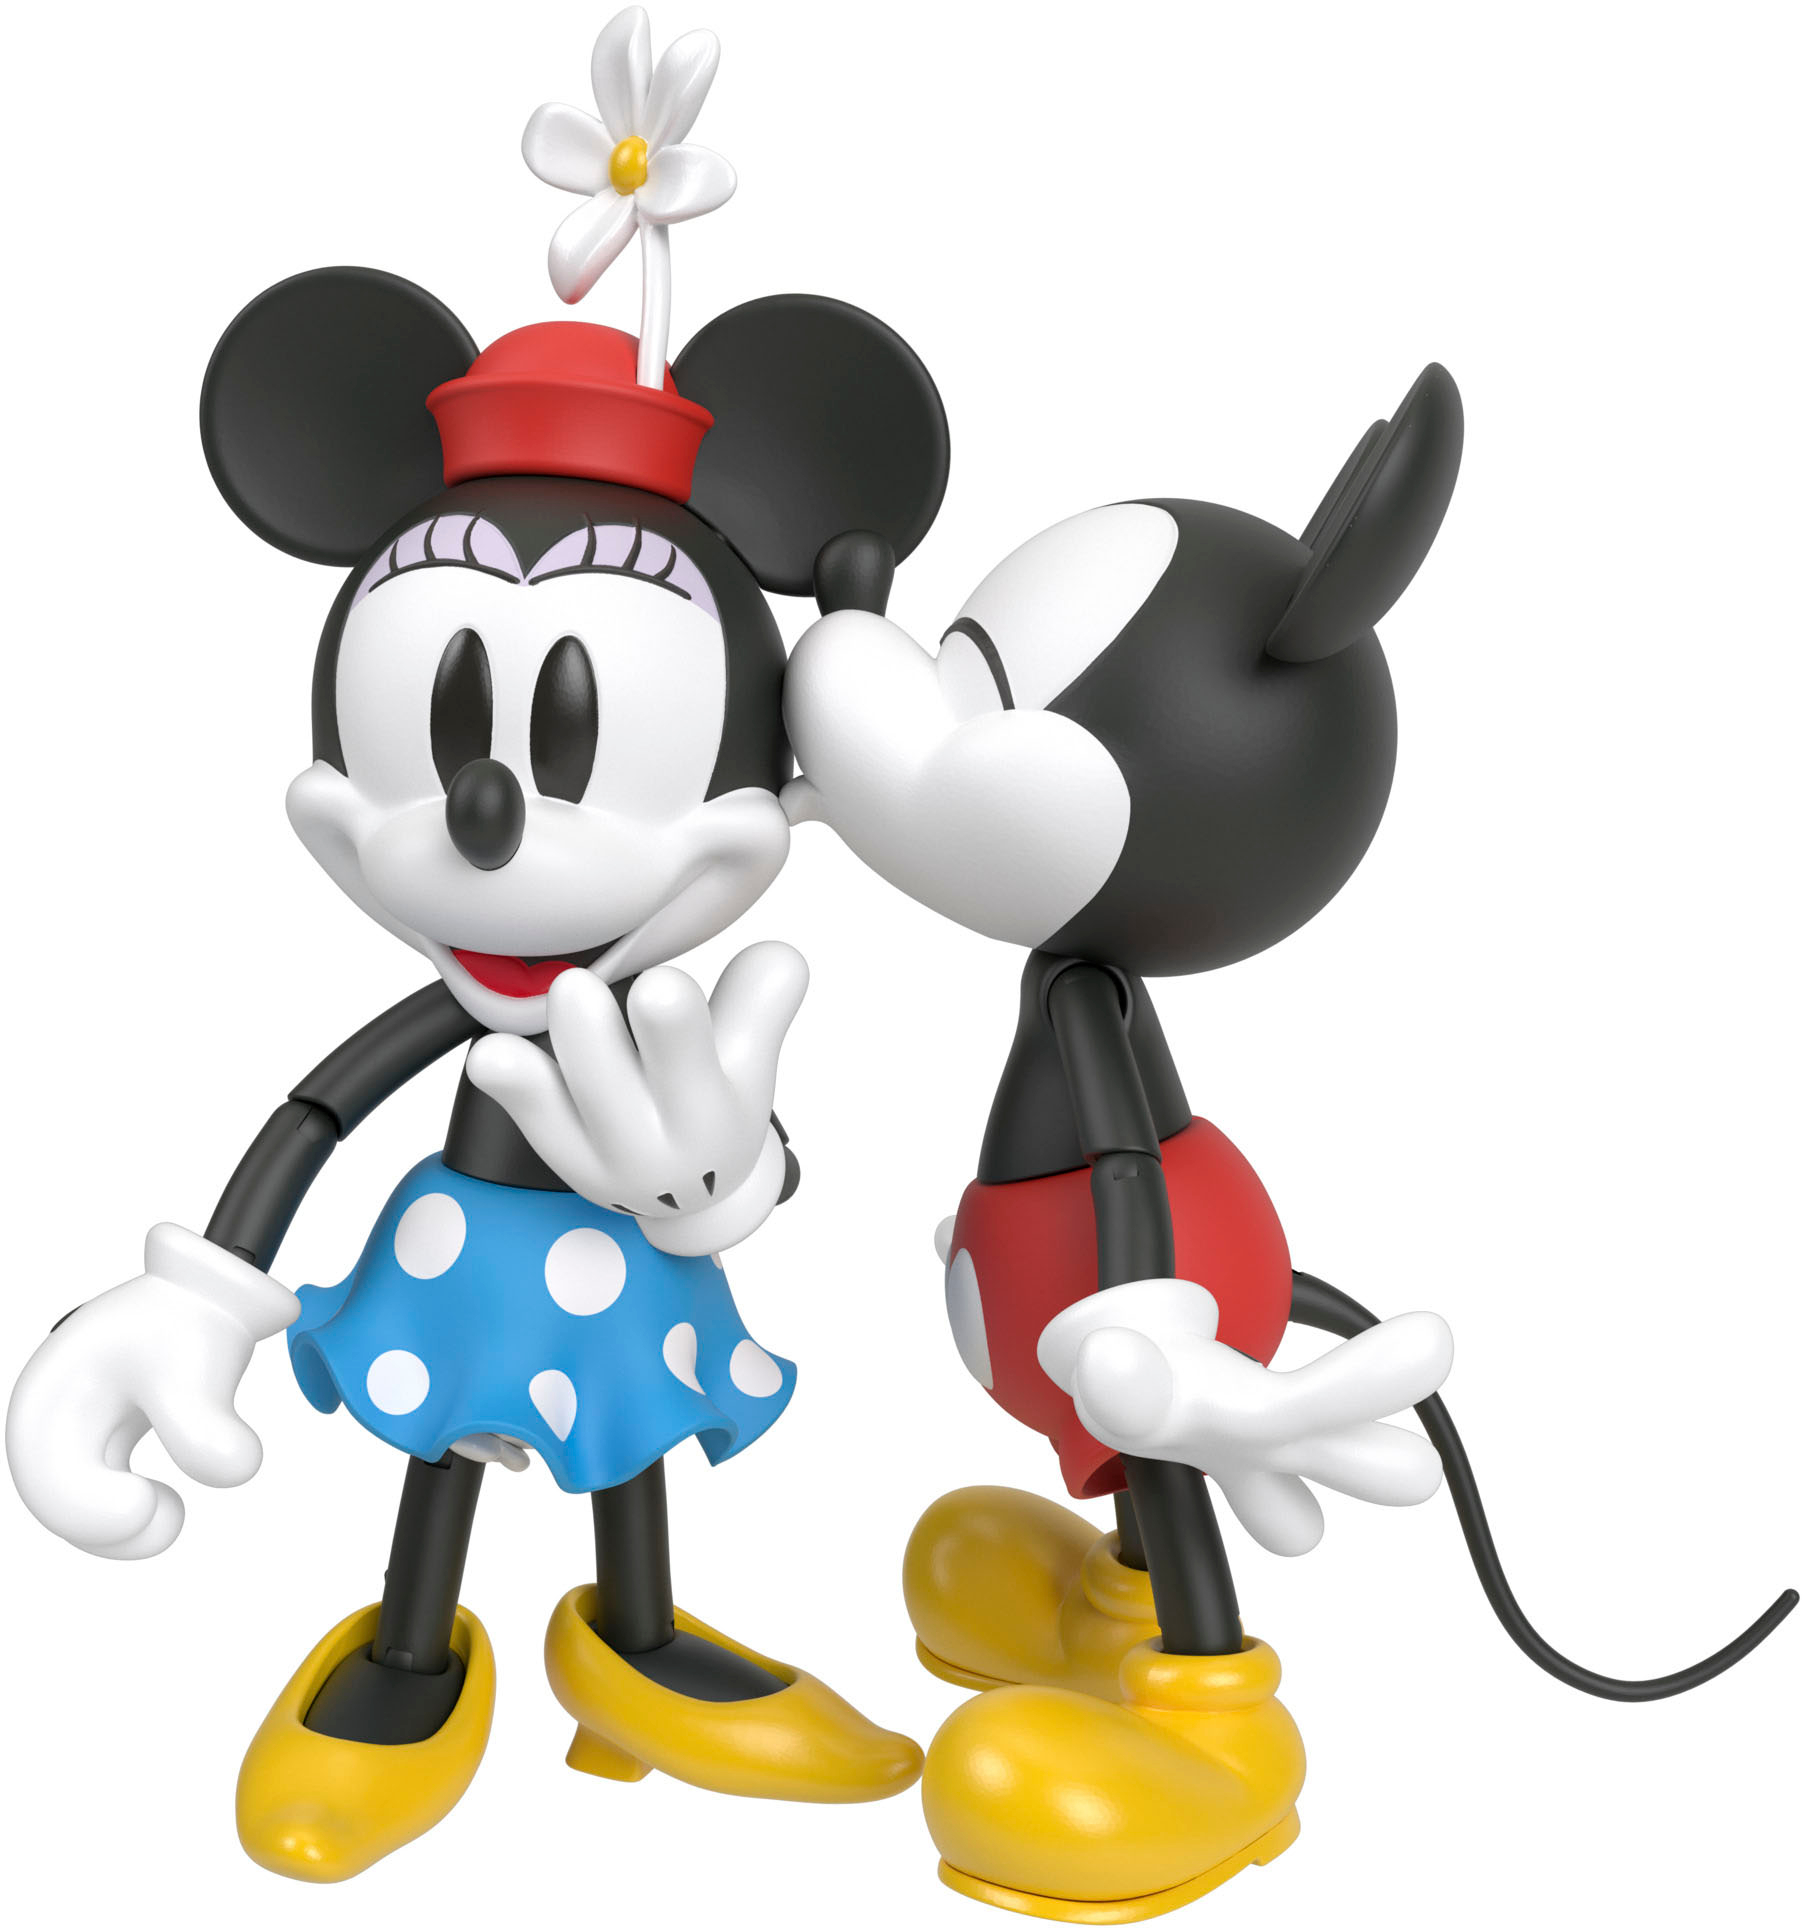 Wholesale Disney Junior Minnie Collectible Sets - DollarDays